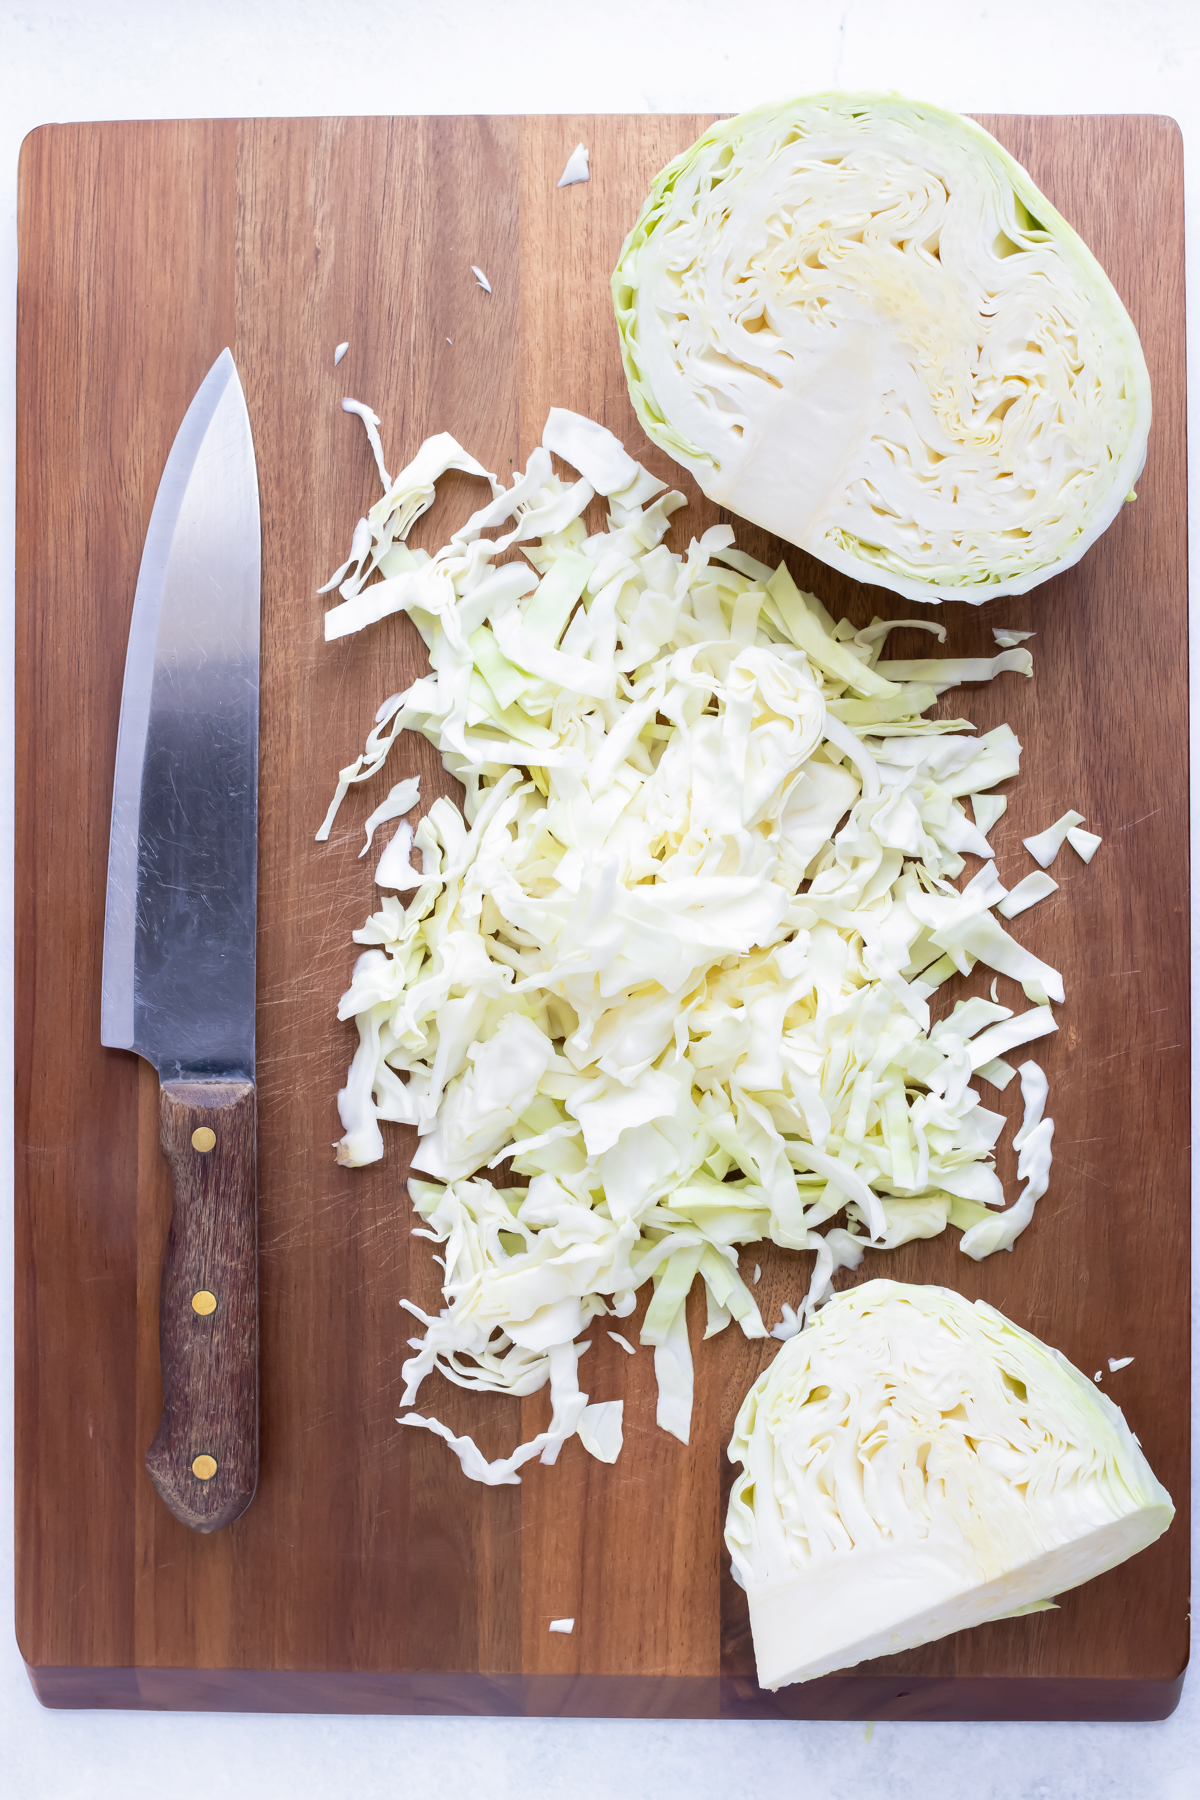 Fully shredded cabbage on a cutting board beside a knife.